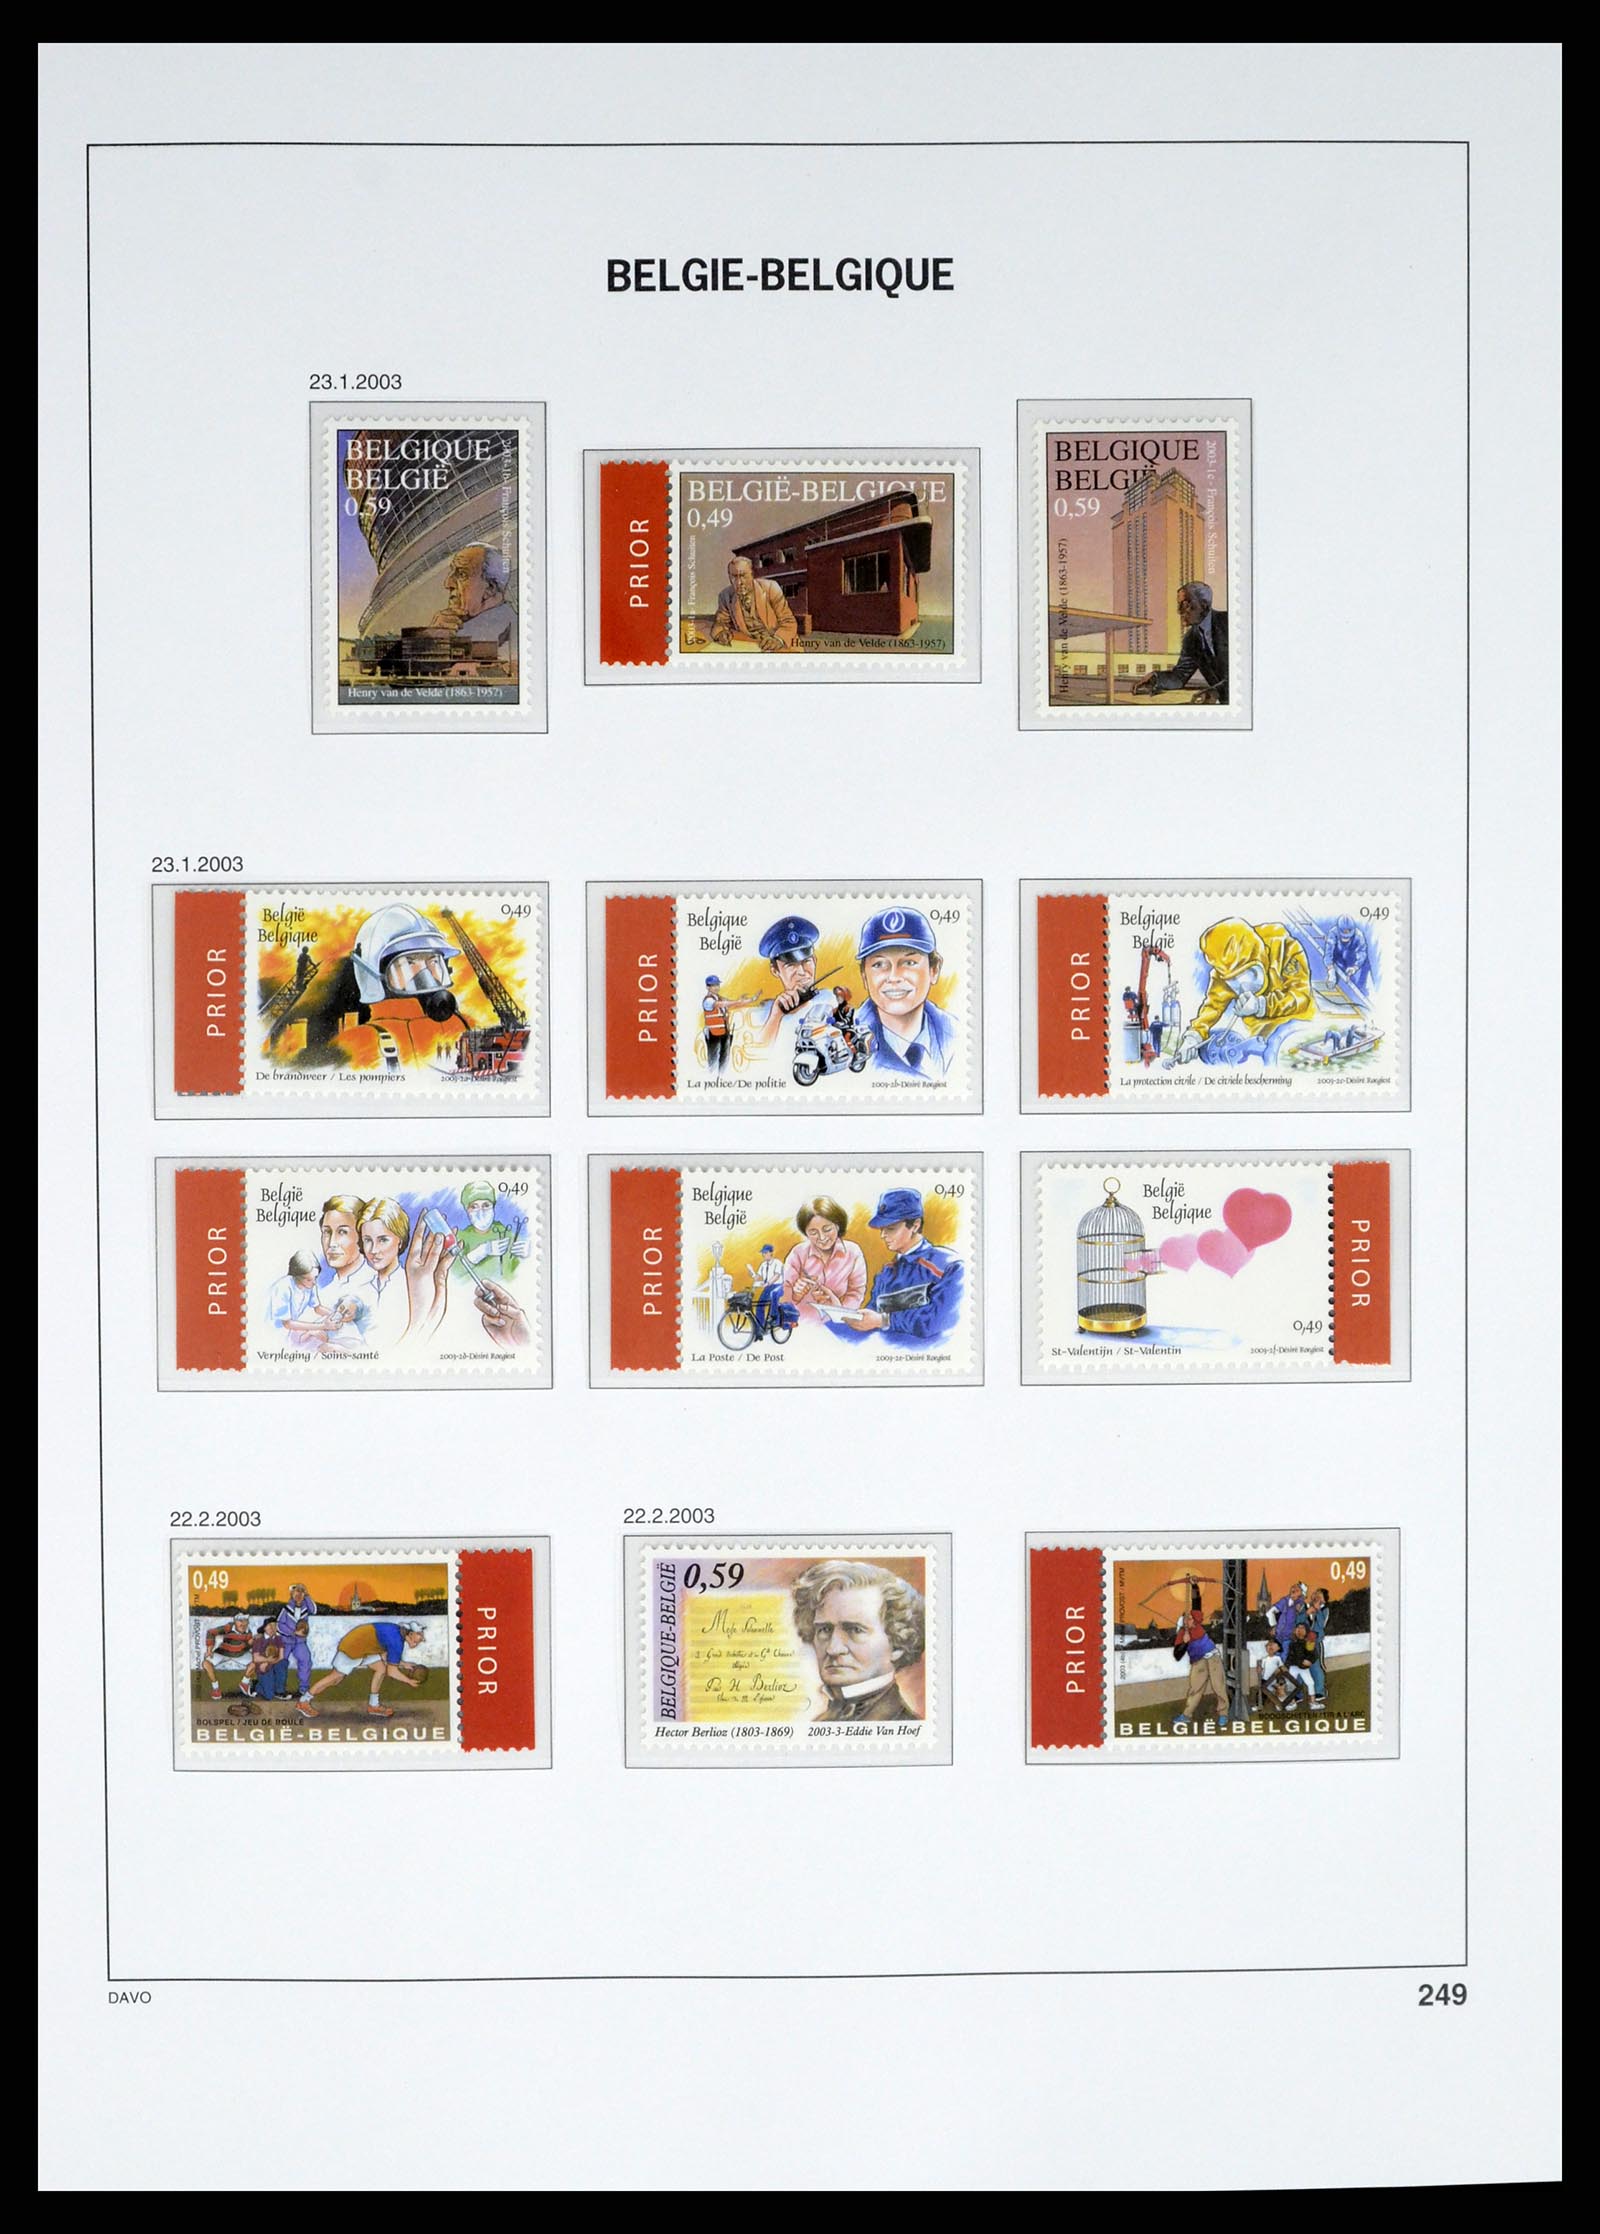 37368 200 - Stamp collection 37368 Belgium 1969-2003.